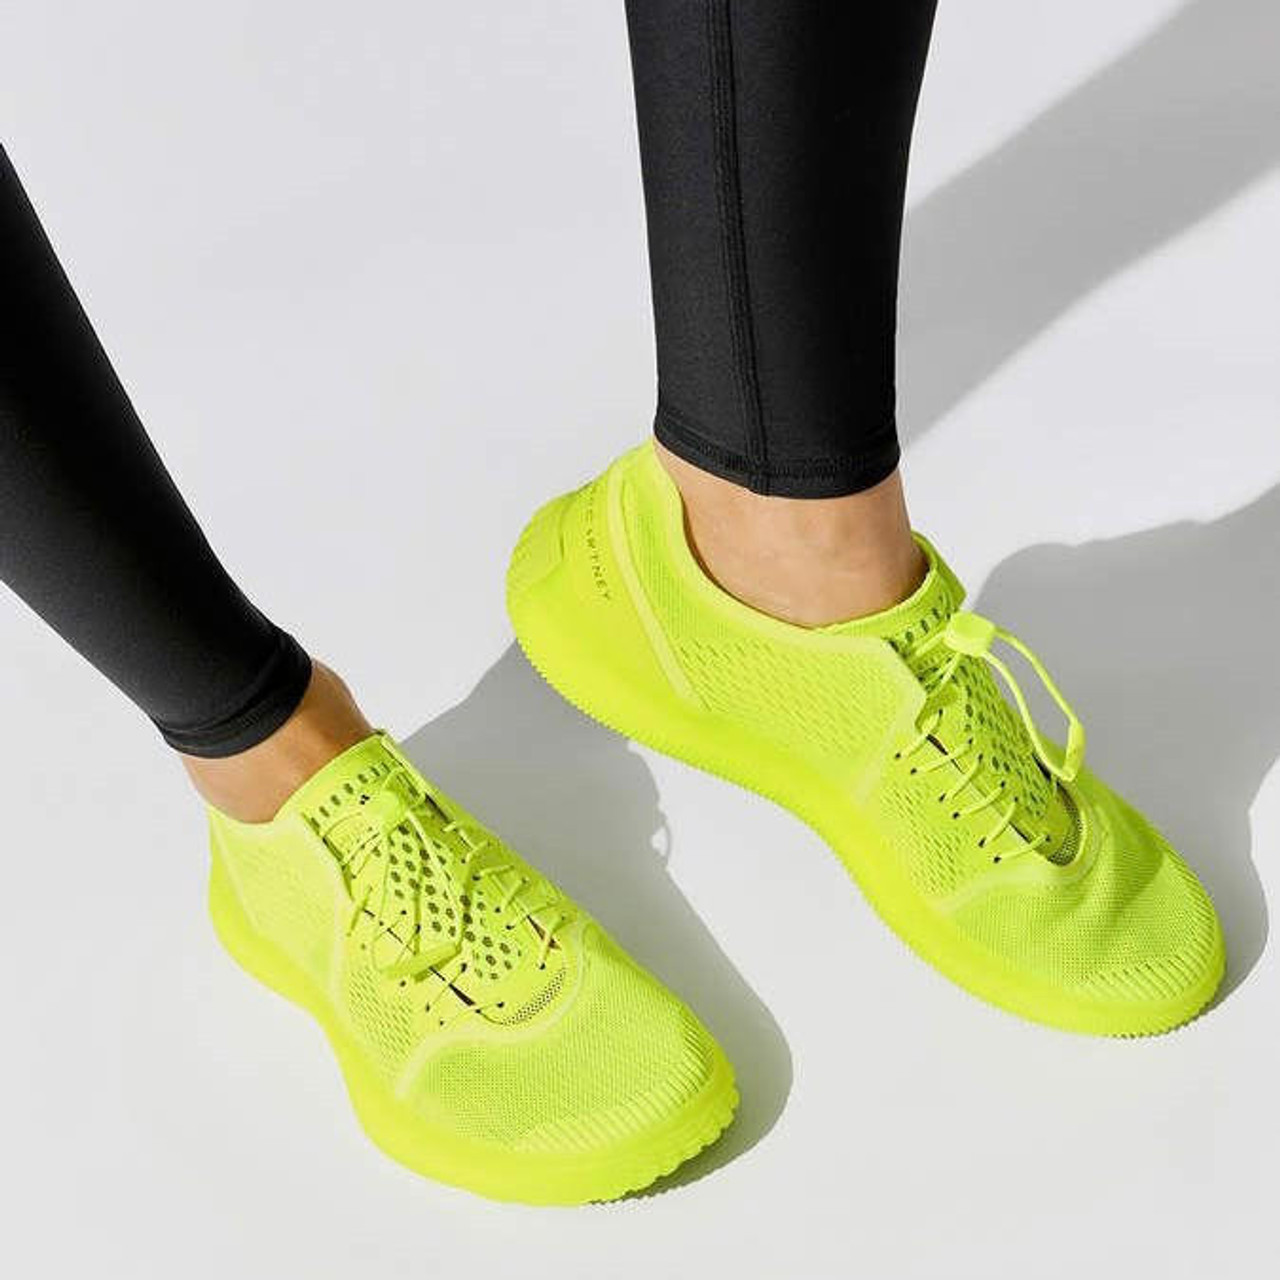 Adidas, 7, Stella McCartney Pureboost Sneakers, Neon - Thread